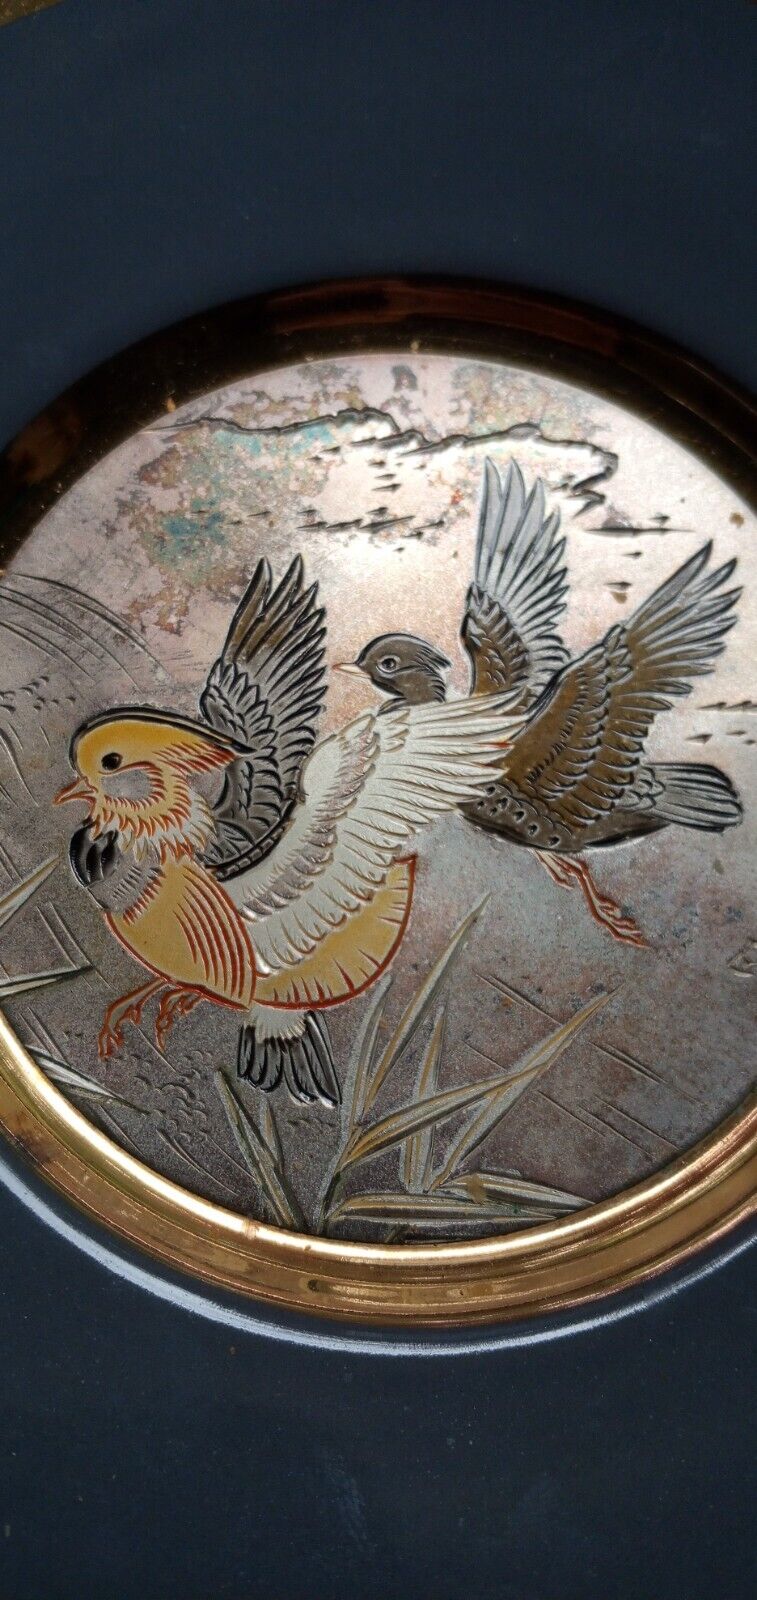 The Art of Chokin Plate 24k Gold Gild Edged, Birdies. Japan 6.25 in Dia